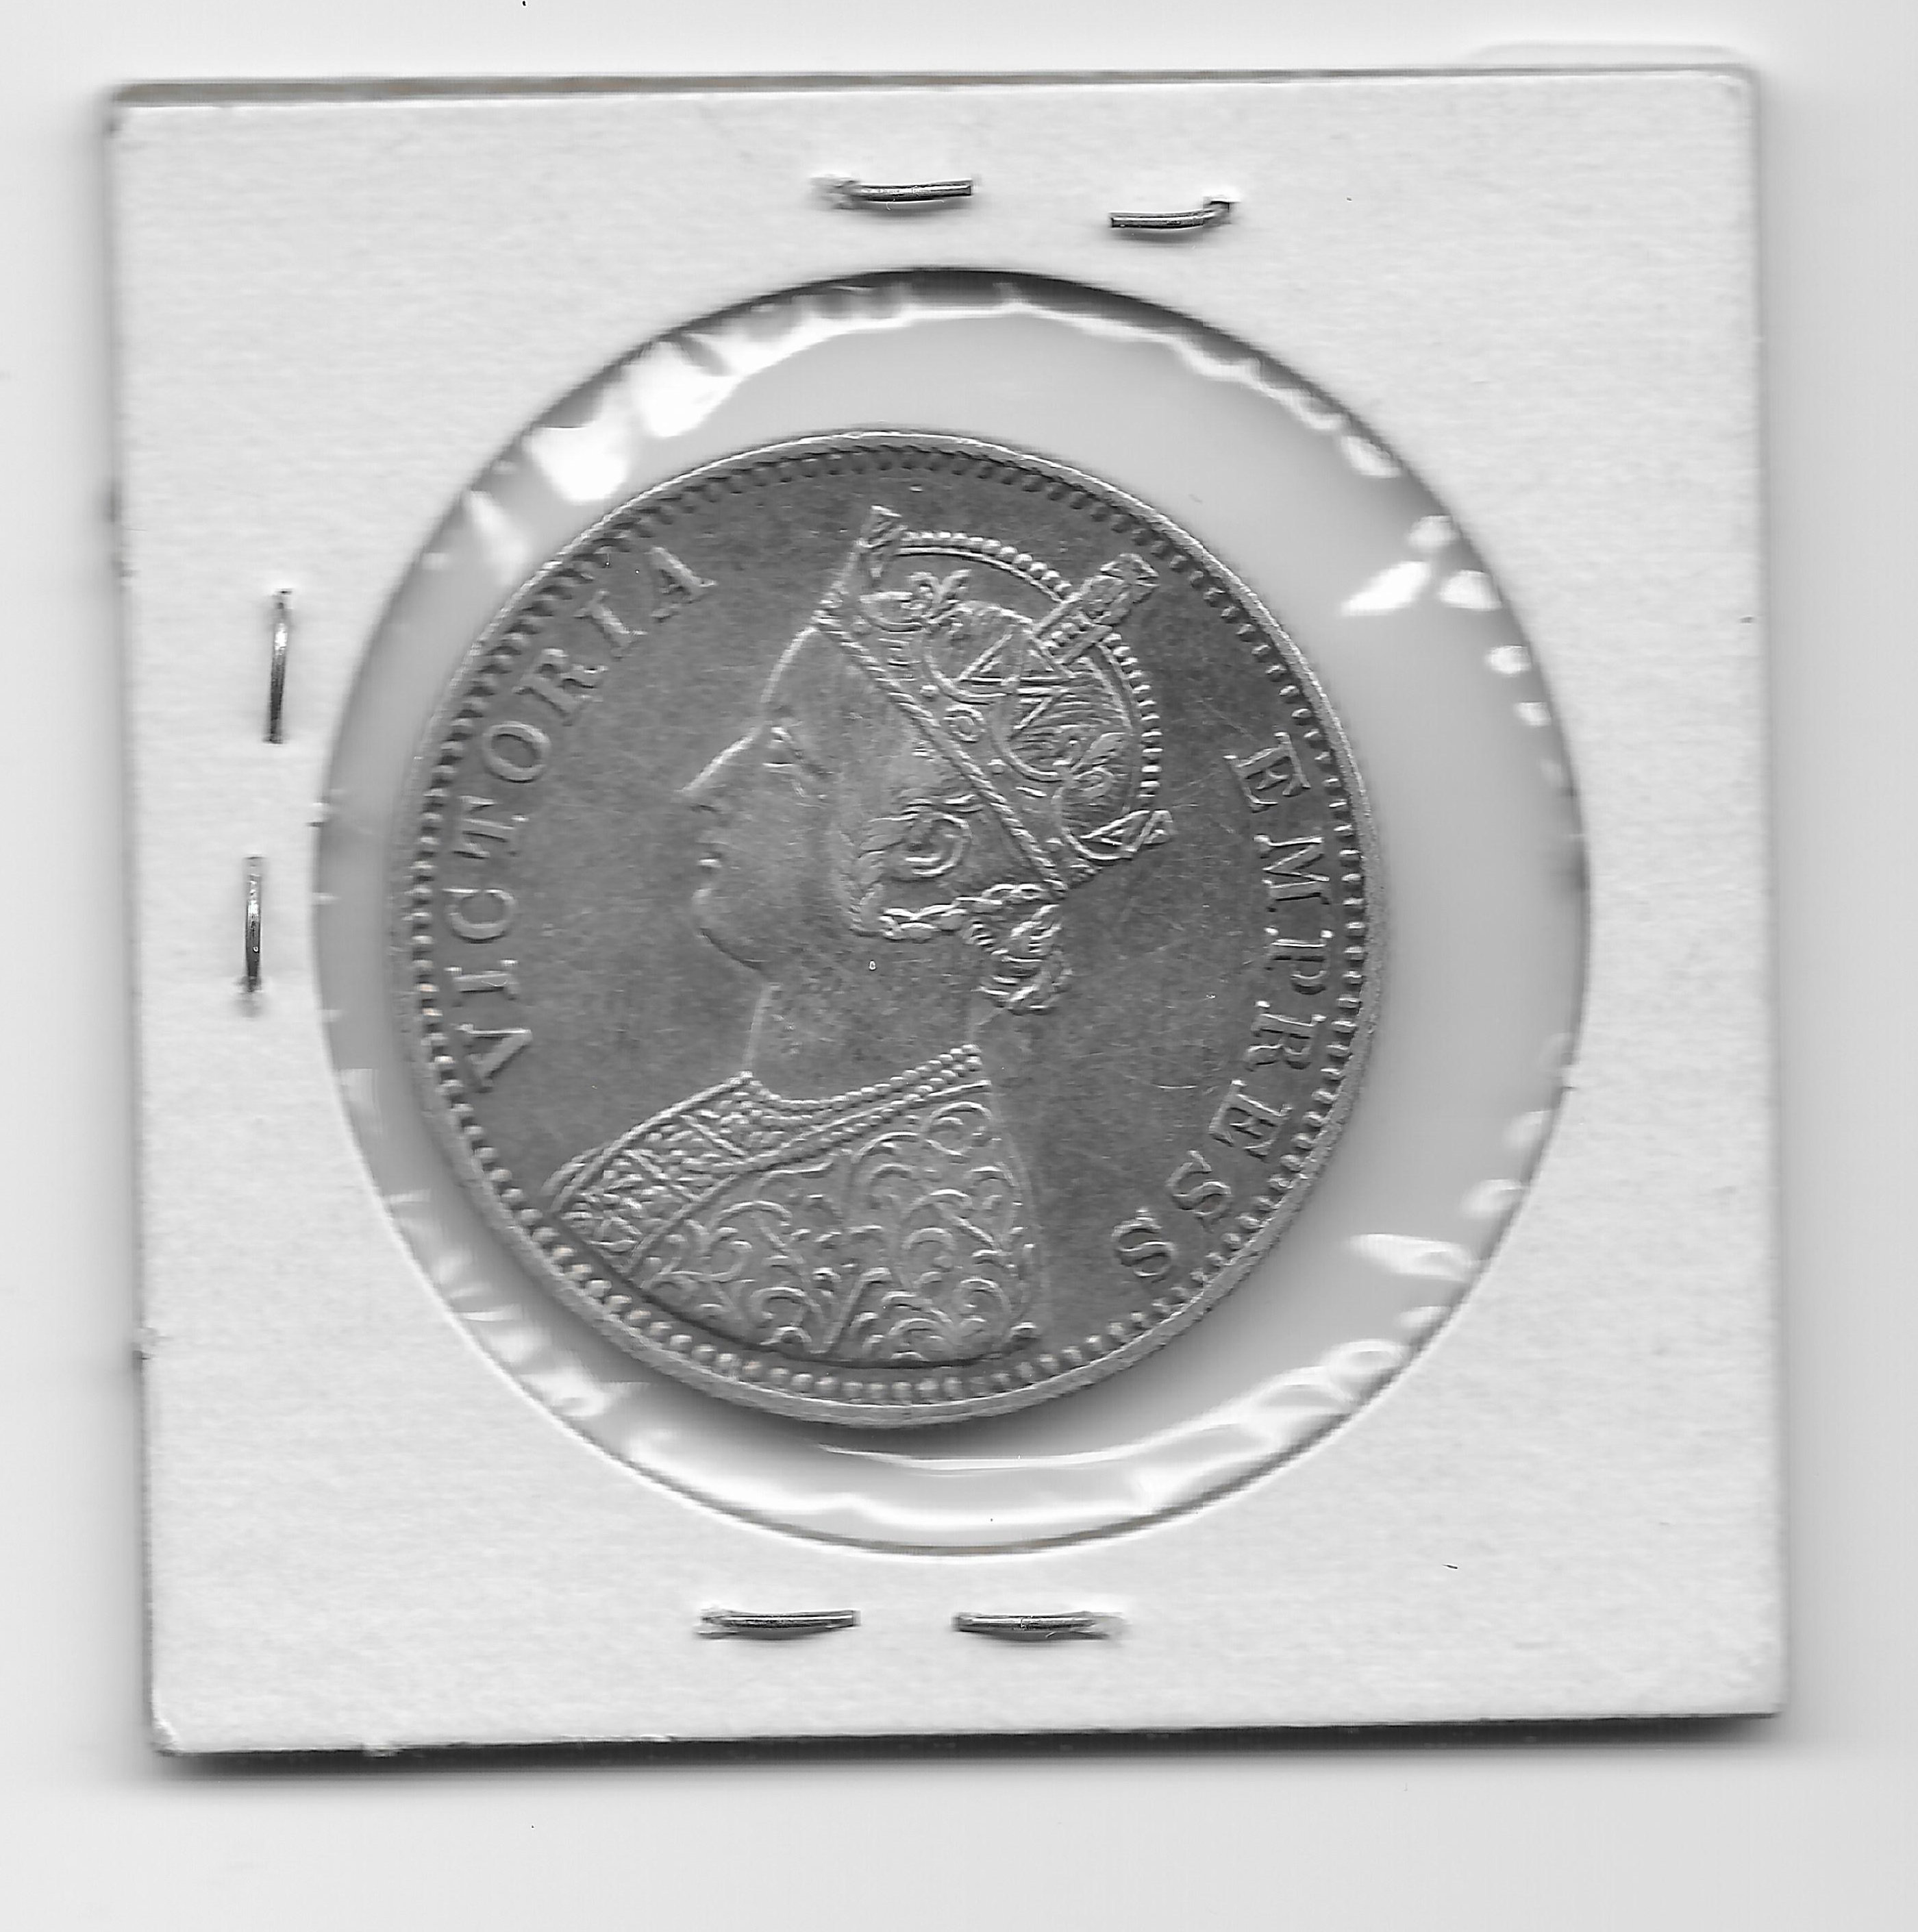 India 1900 rupee silver